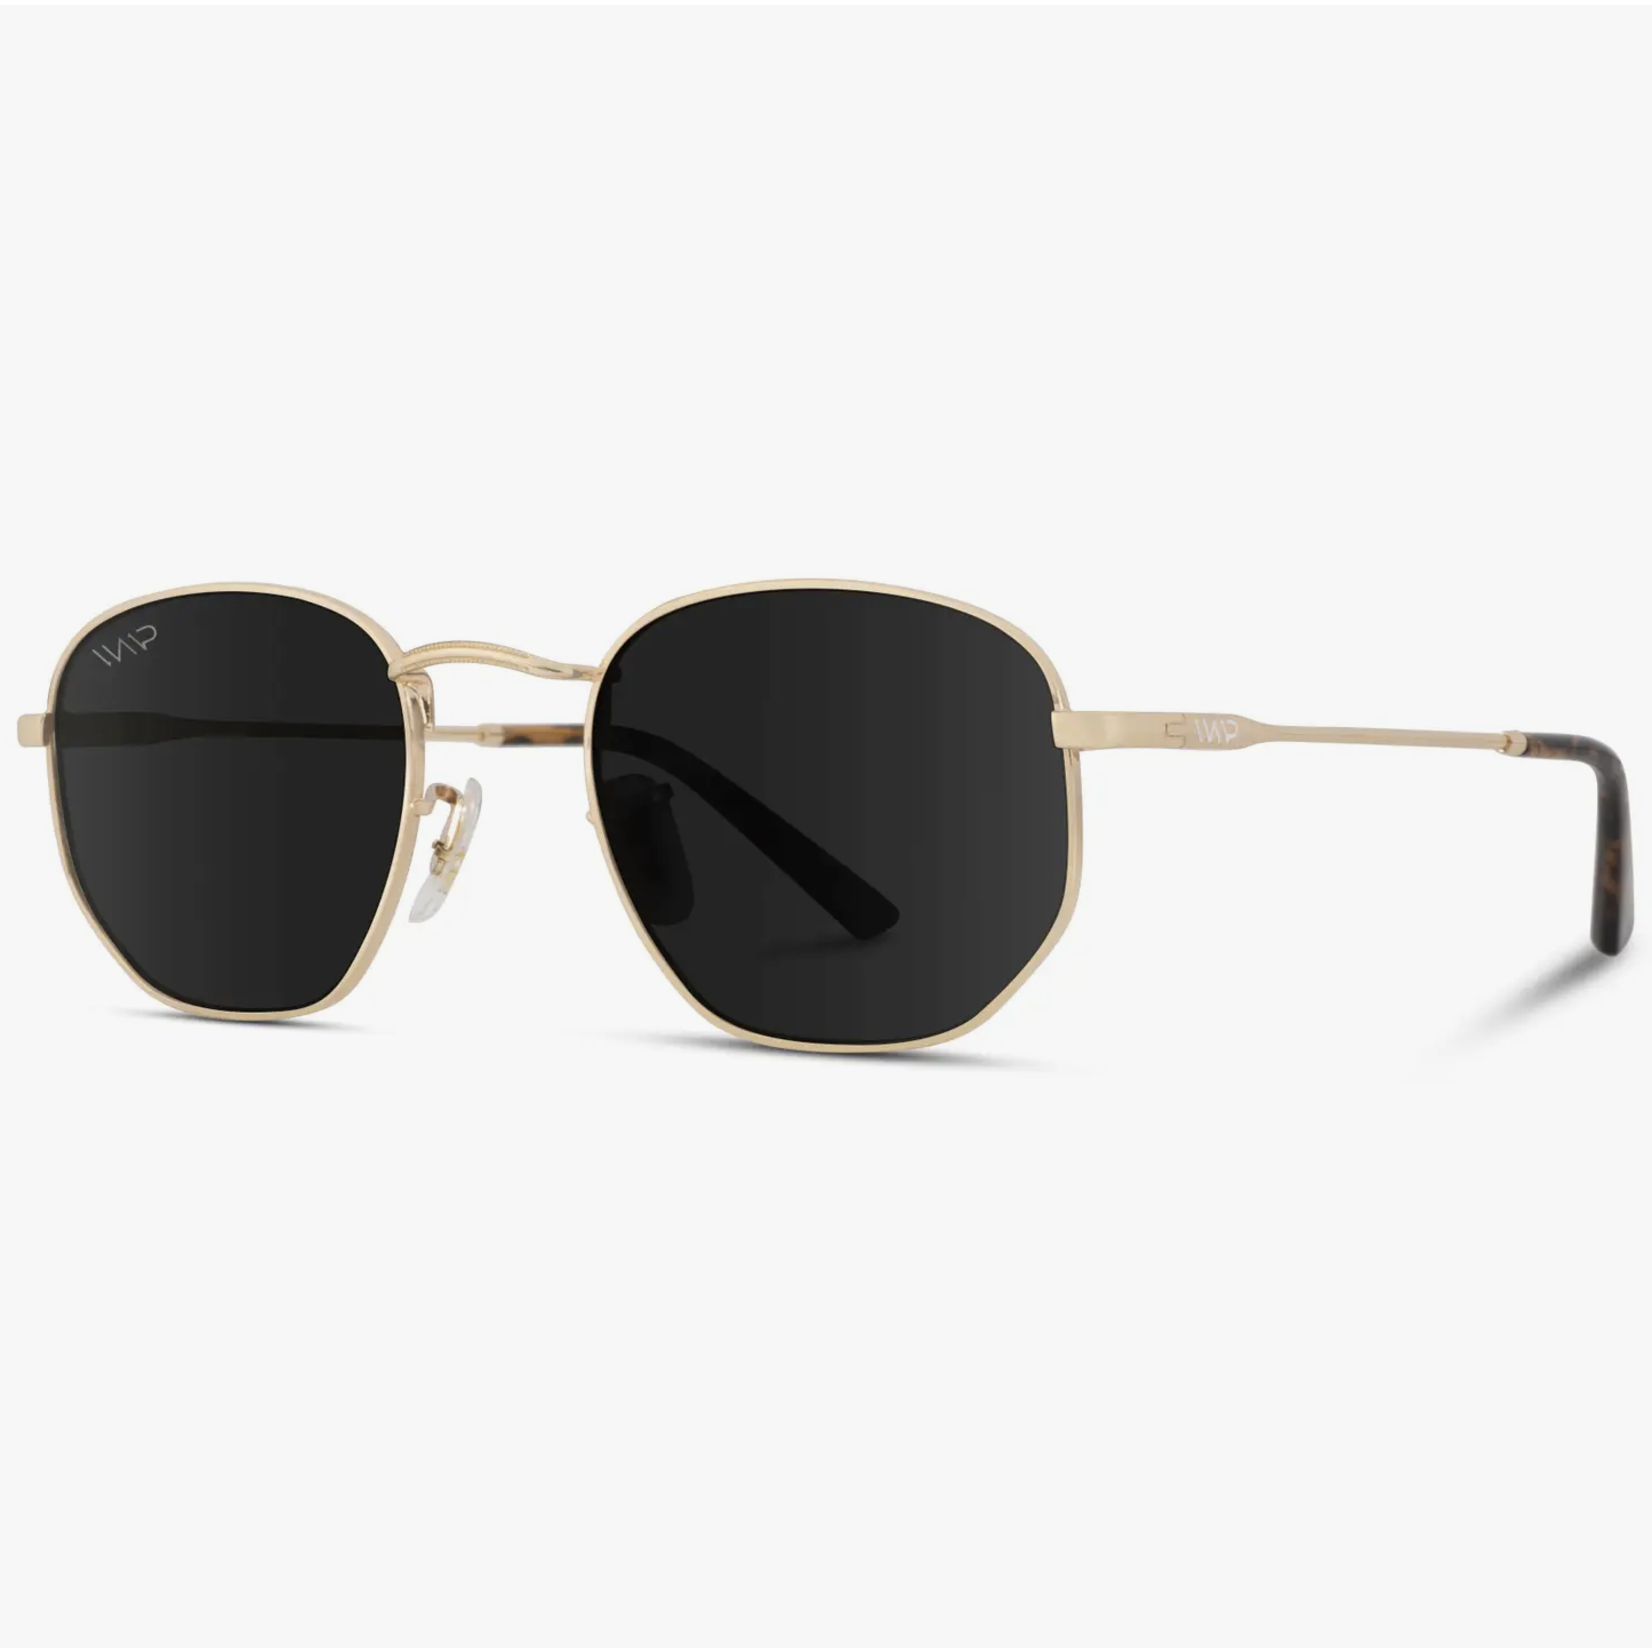 Bexley - Geometric Retro Round Polarized Hexagonal Sunglasses Gold Frame/Black Lens